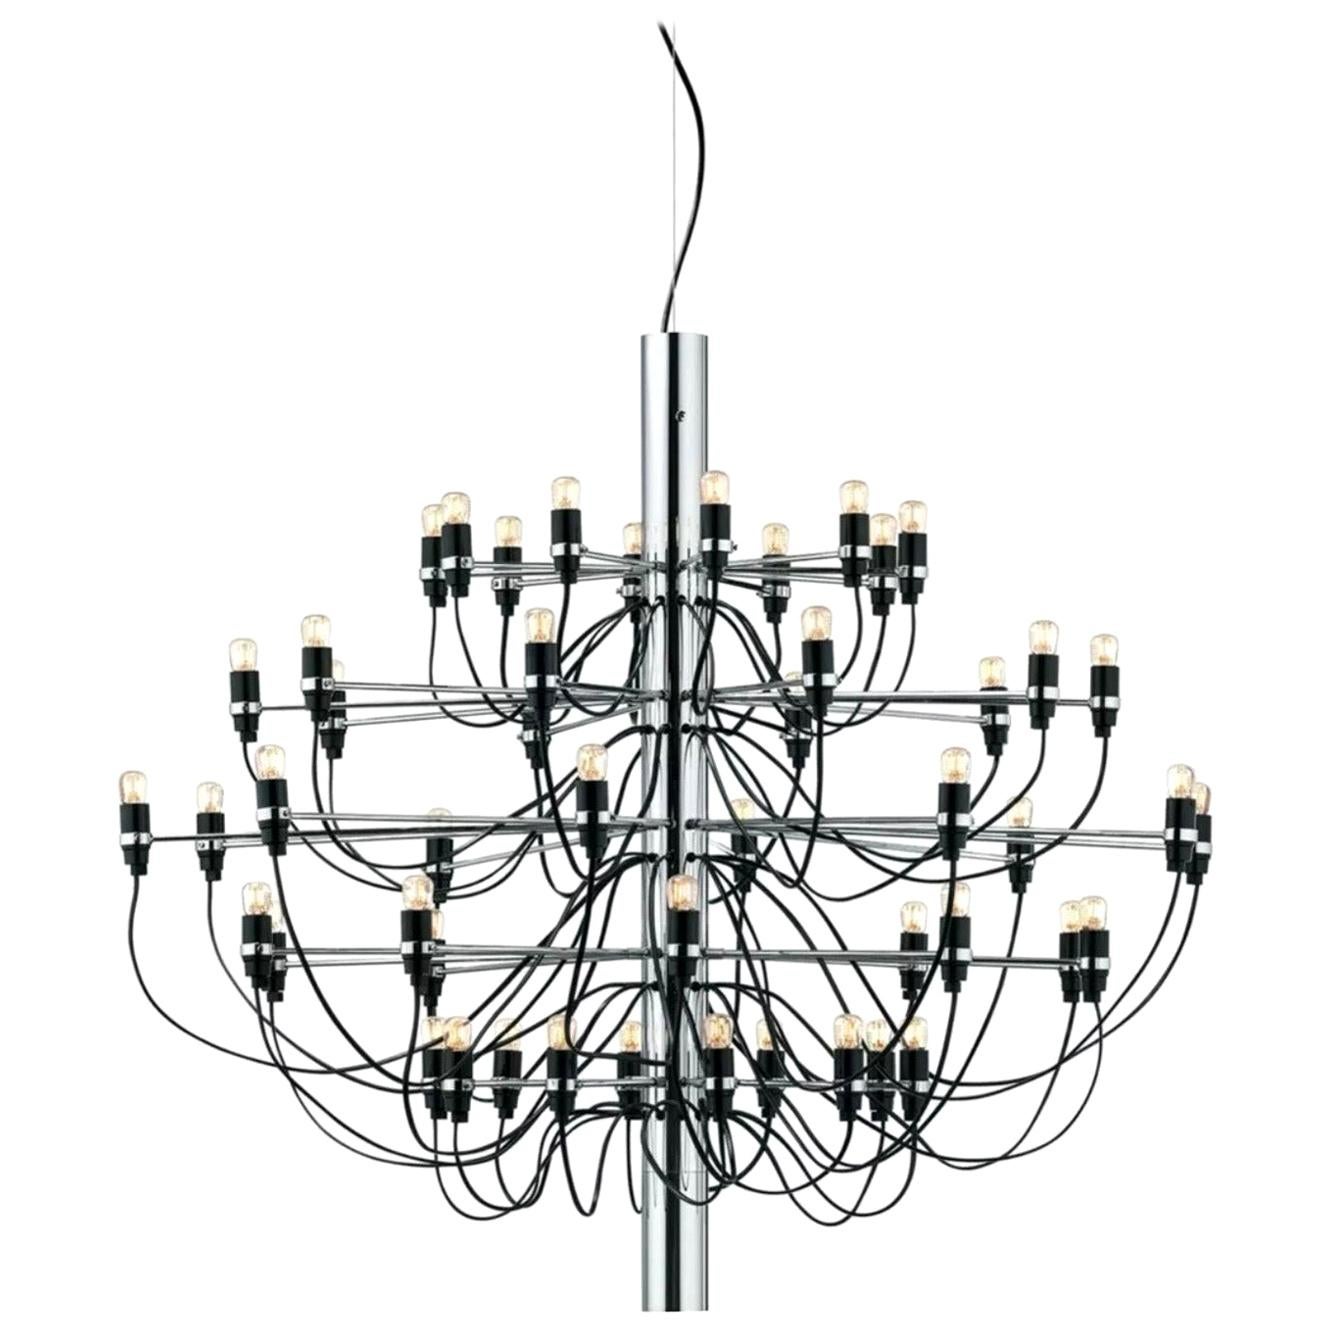 Flos 2097 / 30 Light Bulbs Iron Suspension Pendant Chandelier by Gino Sarfatti